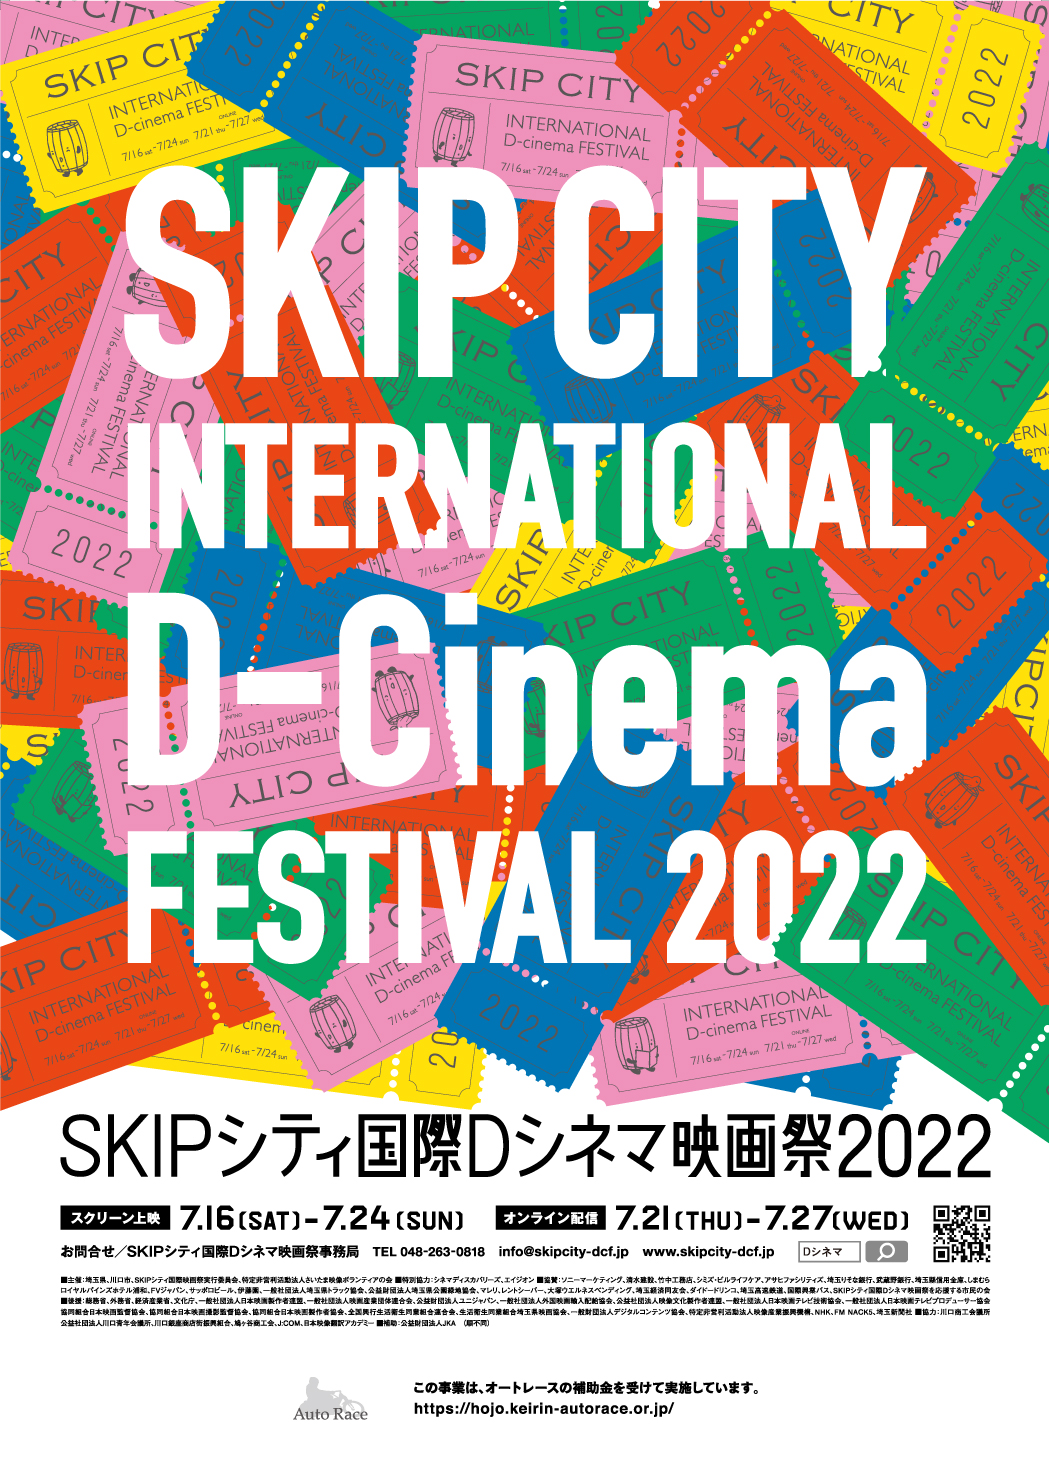 SKIP CITY INTERNATIONAL D-Cinema FESTIVAL 2022 Poster